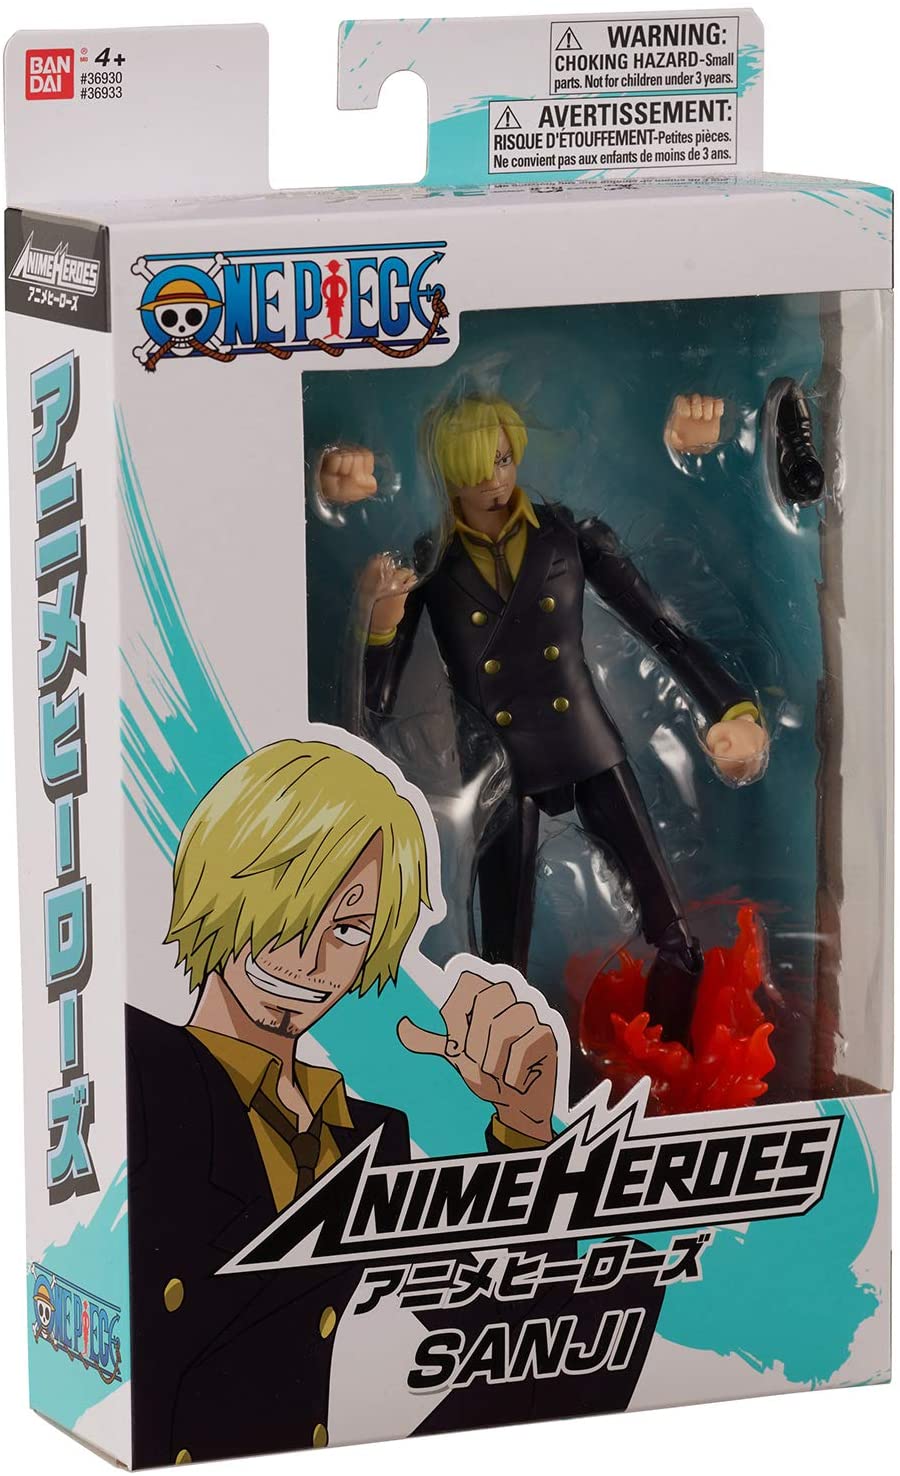 Anime Heroes – One Piece – Sanji Actionfigur 36933